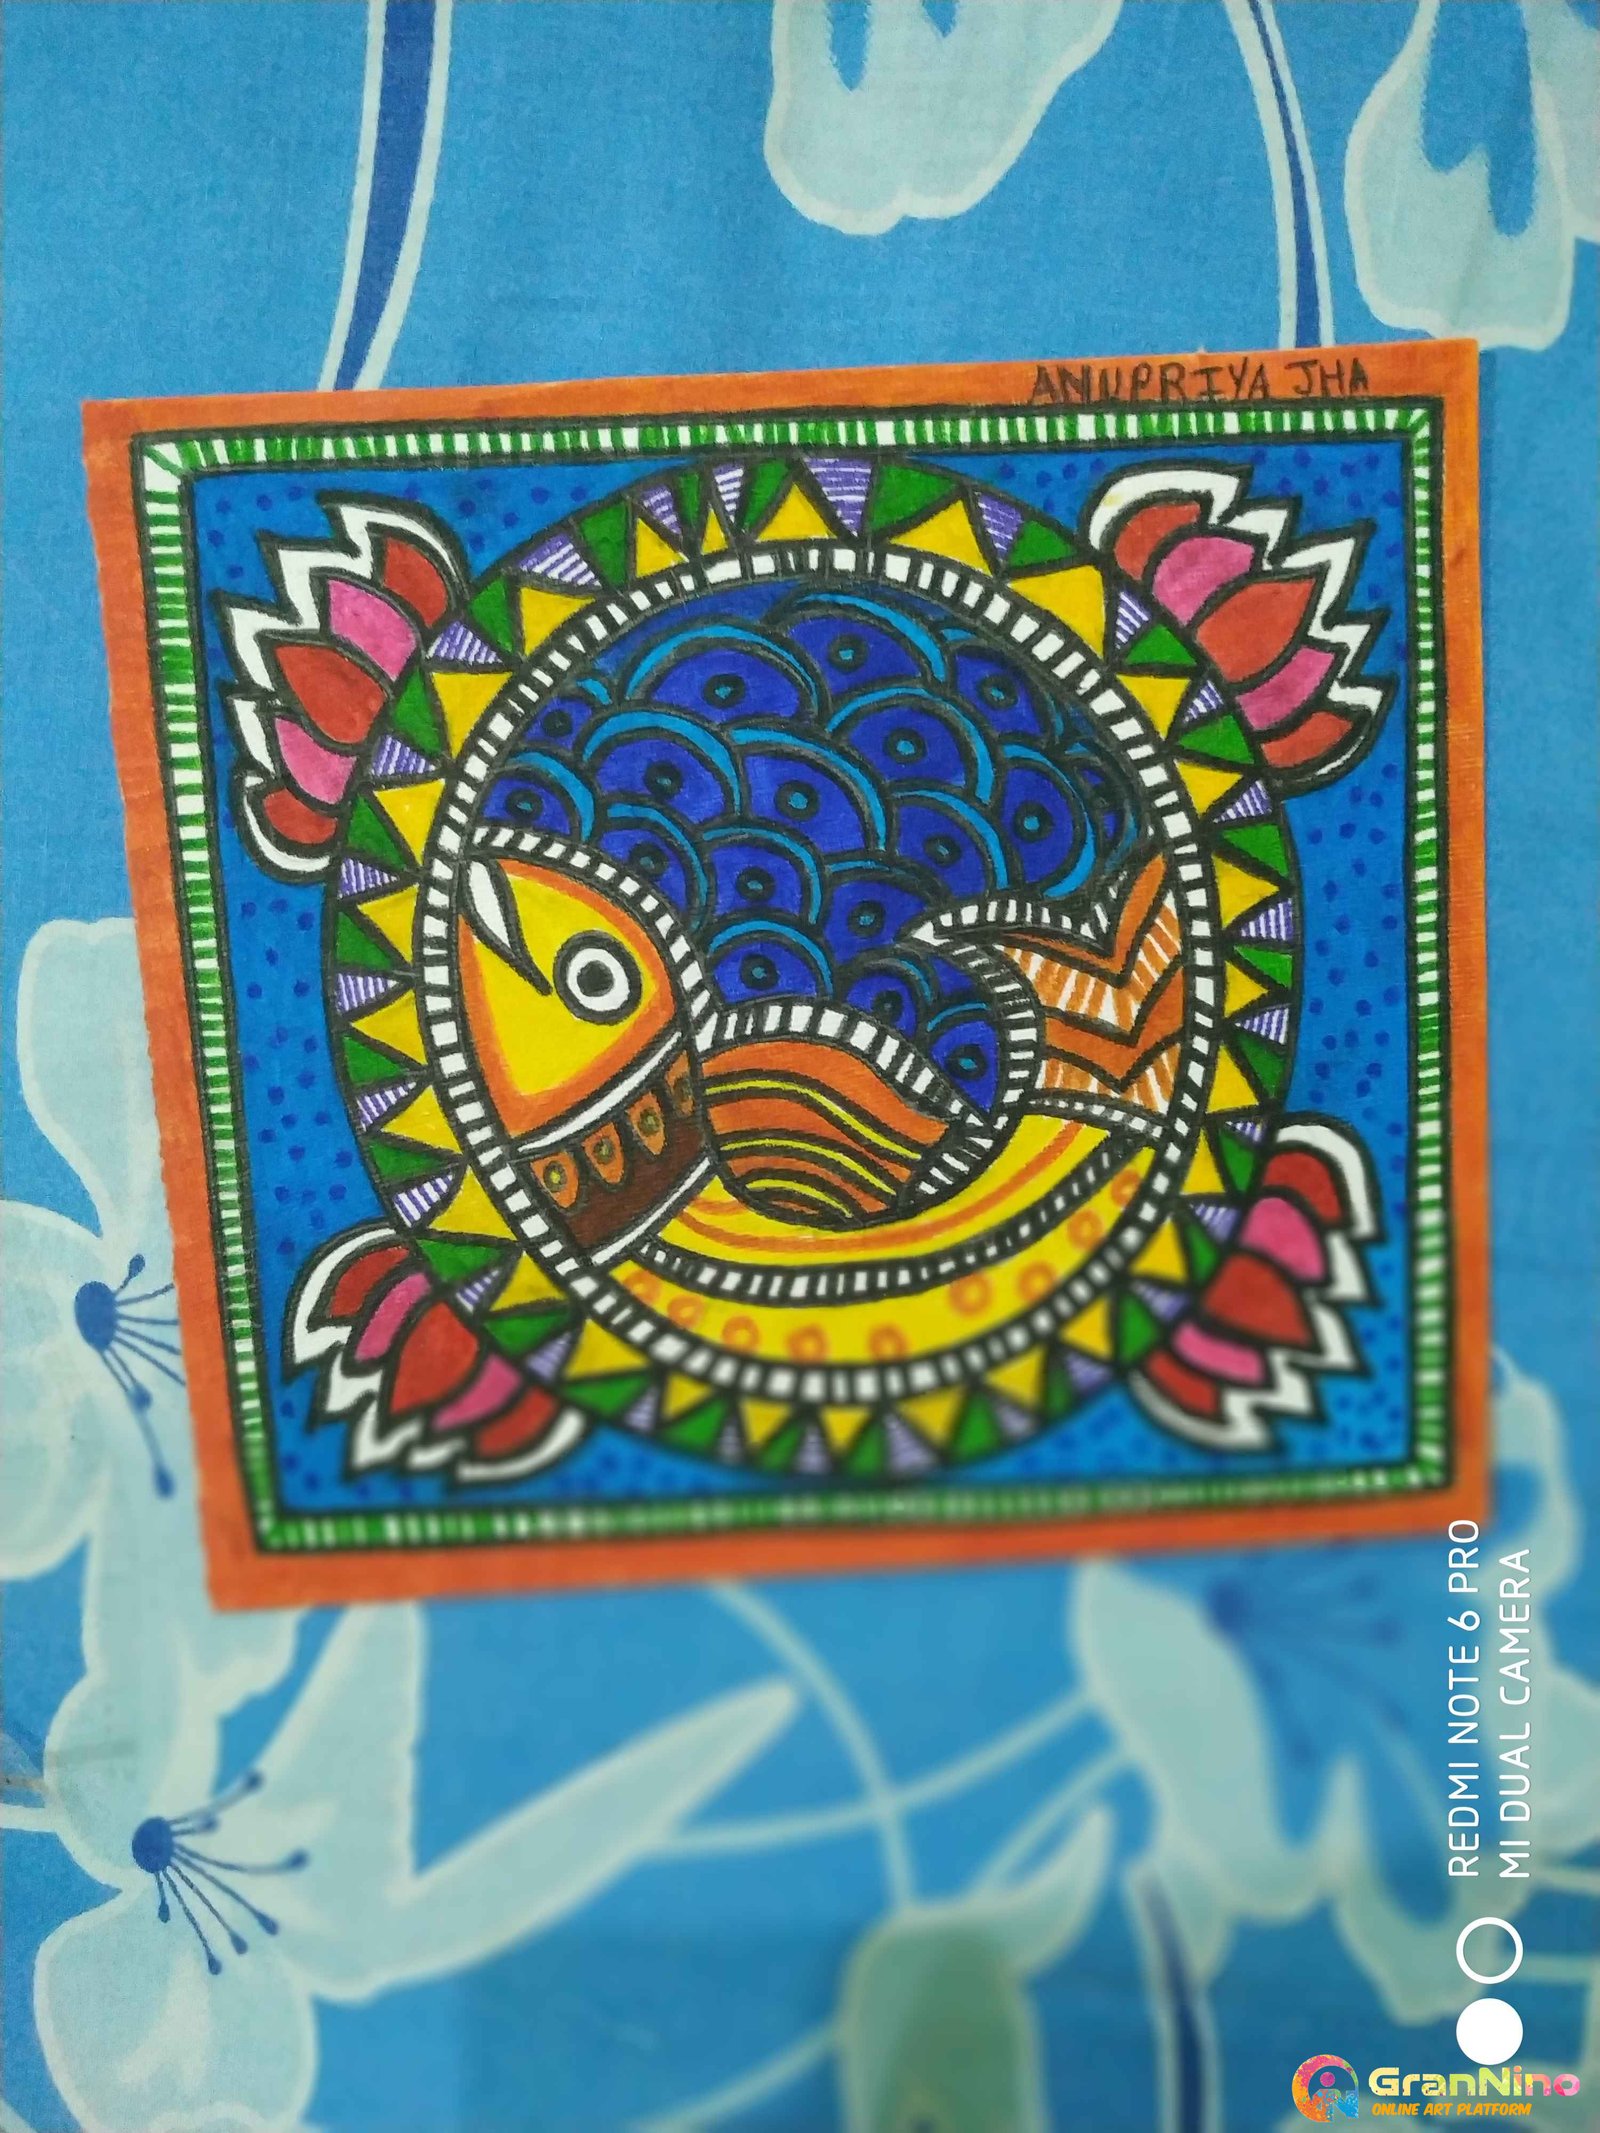 Buy Ramayan Madhubani Paintings - Original Mithila Art | Urbane Yogi